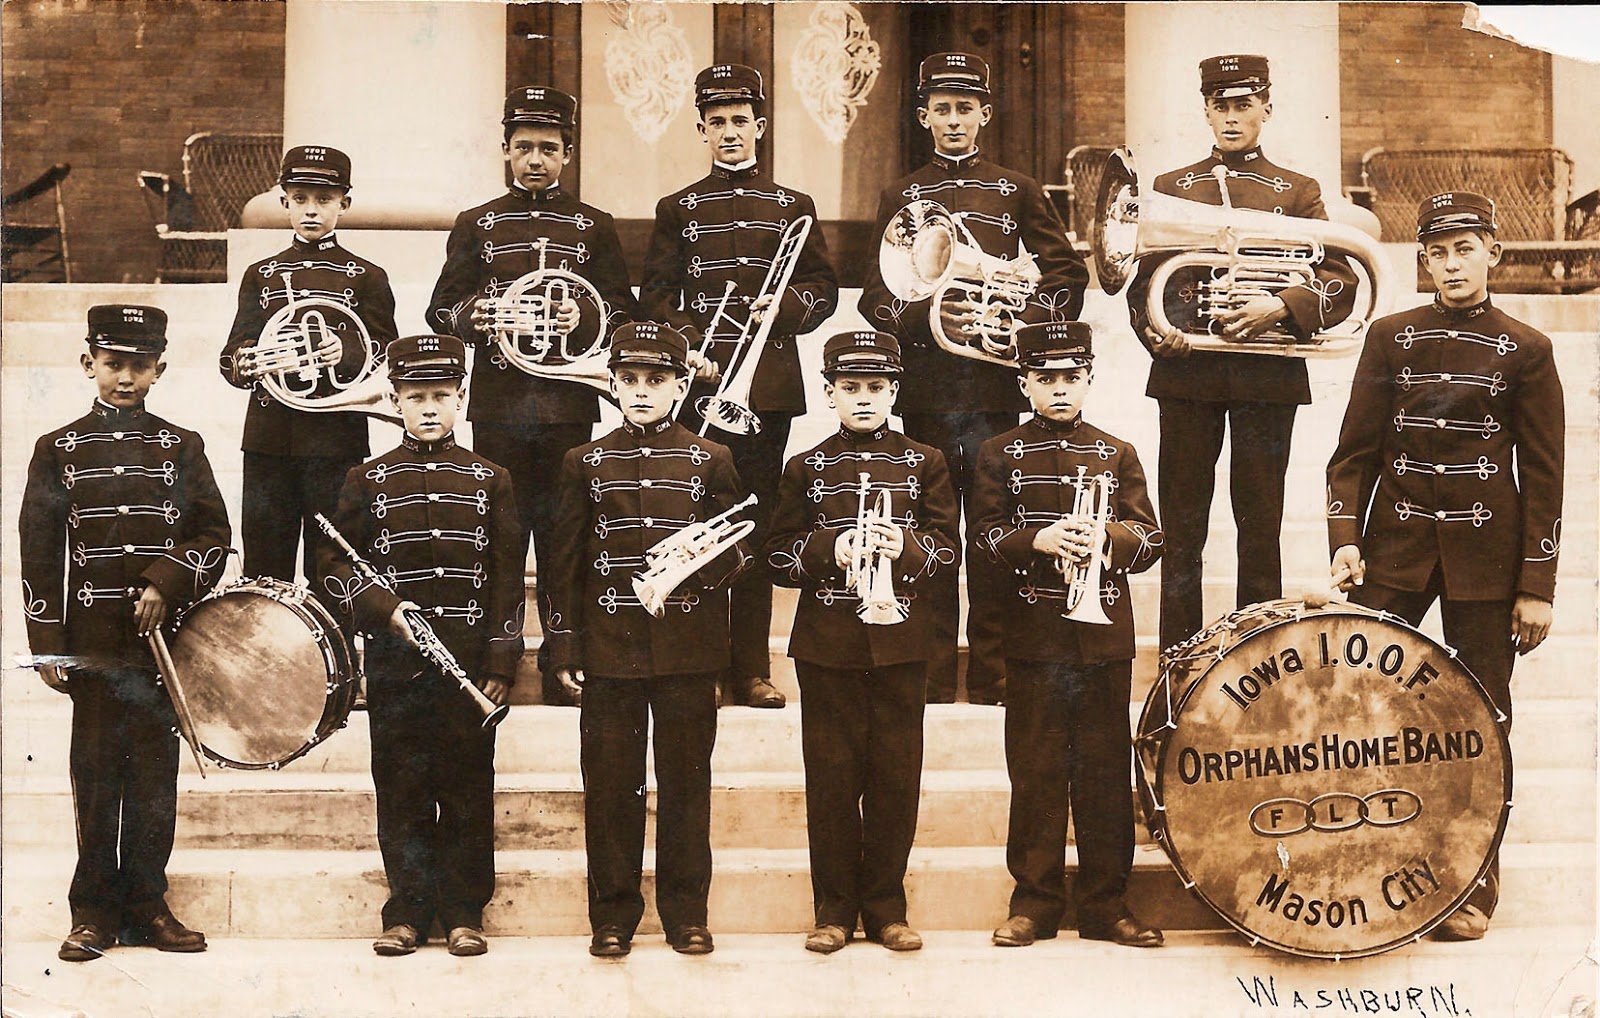 Iowa Soldiers Orphans Home Давенпорт. Mason Band. Freemason records Ростов. Home orchestra